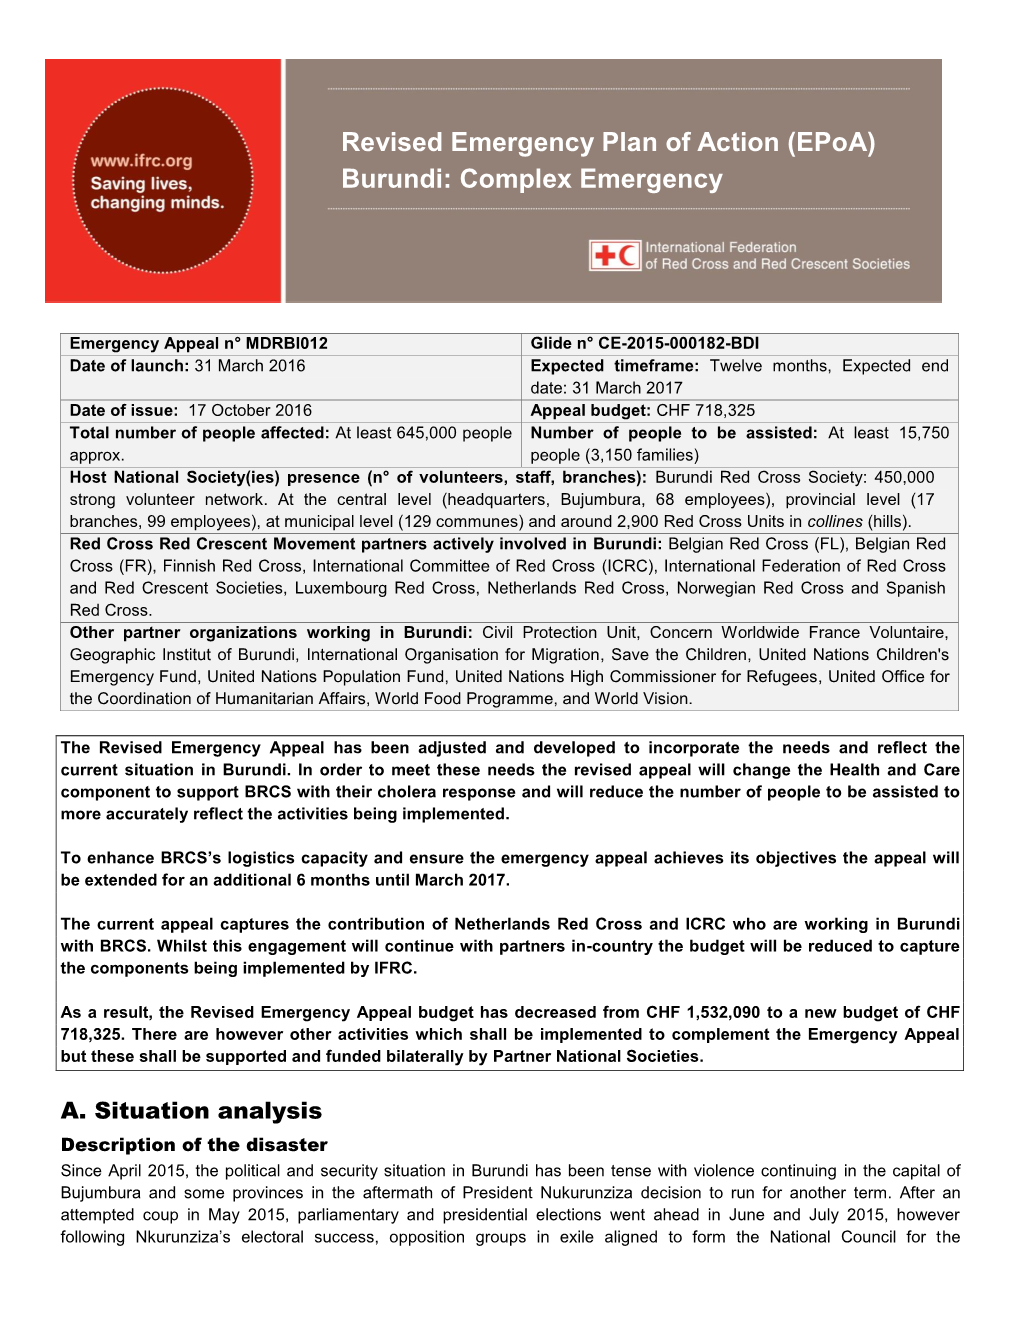 Burundi: Complex Emergency